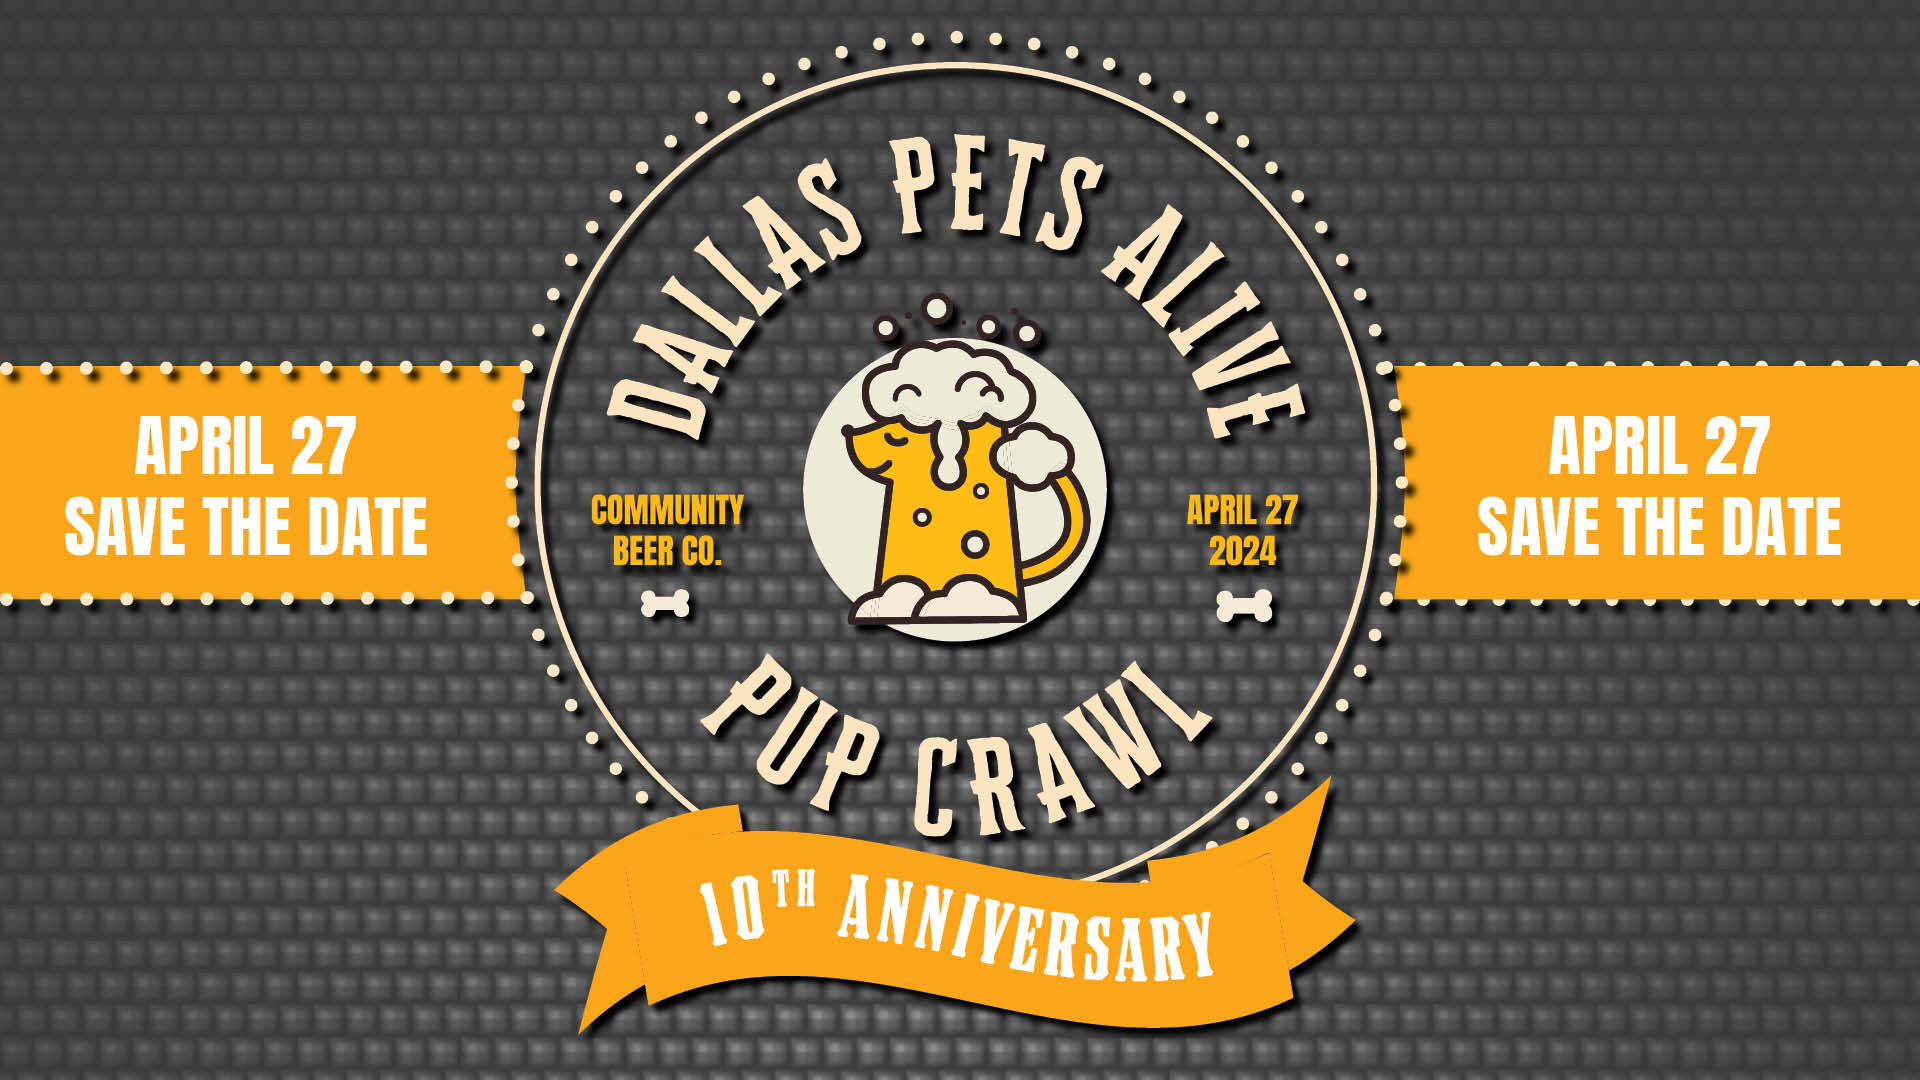 Dallas Pets Alive Pup Crawl 10th Anniversary April 27, 2024 - Save the Date!